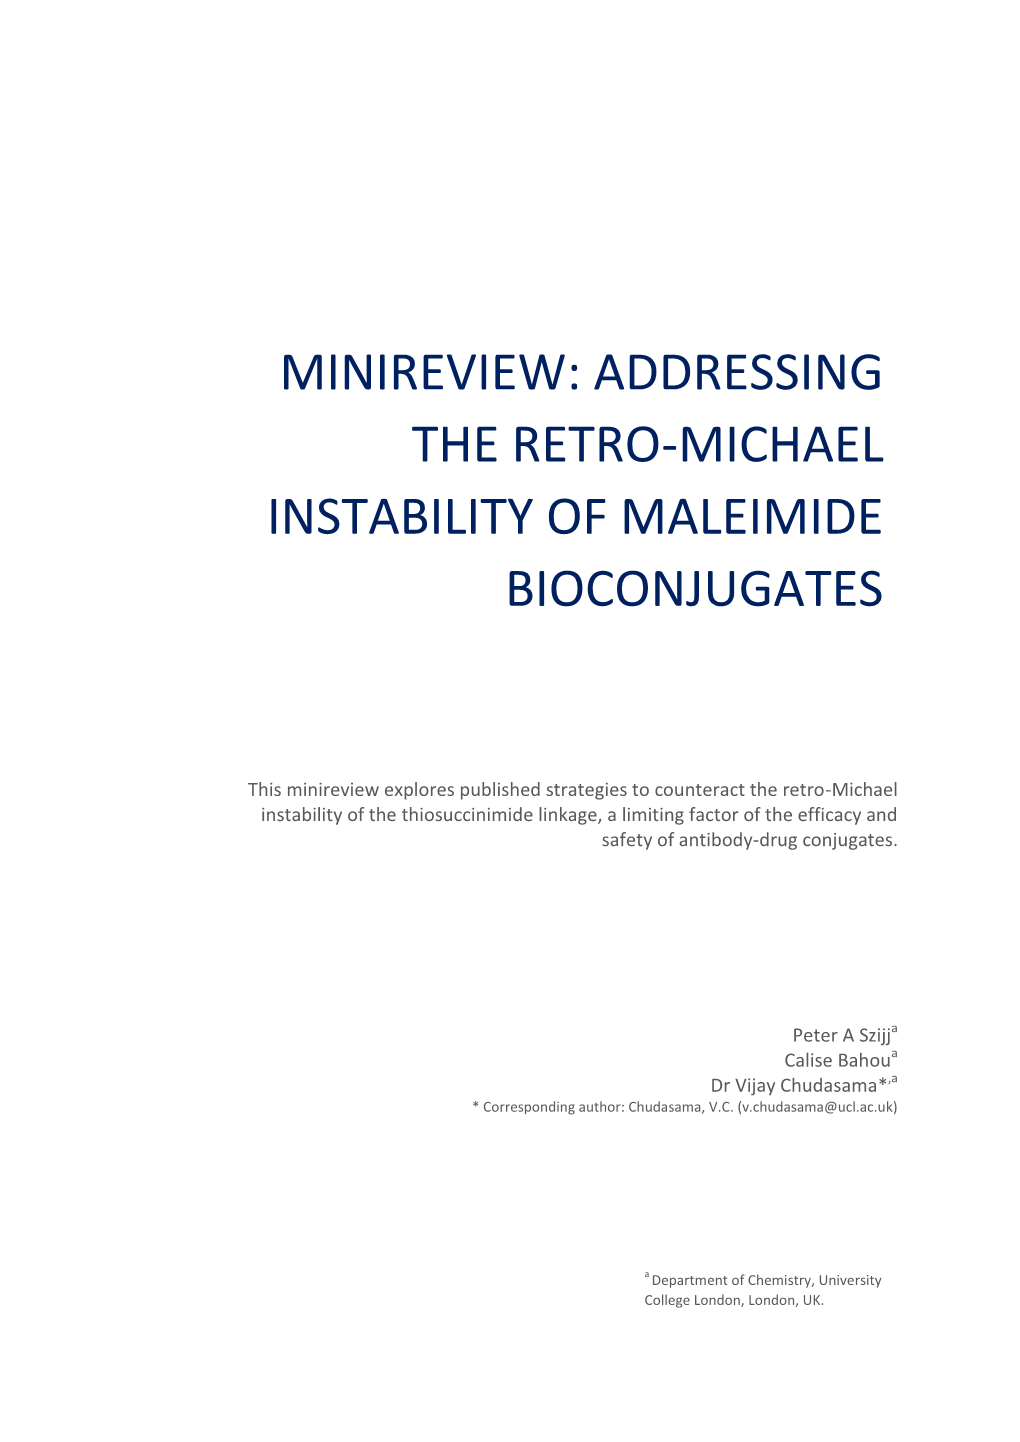 Minireview: Self-Hydrolysing Maleimides